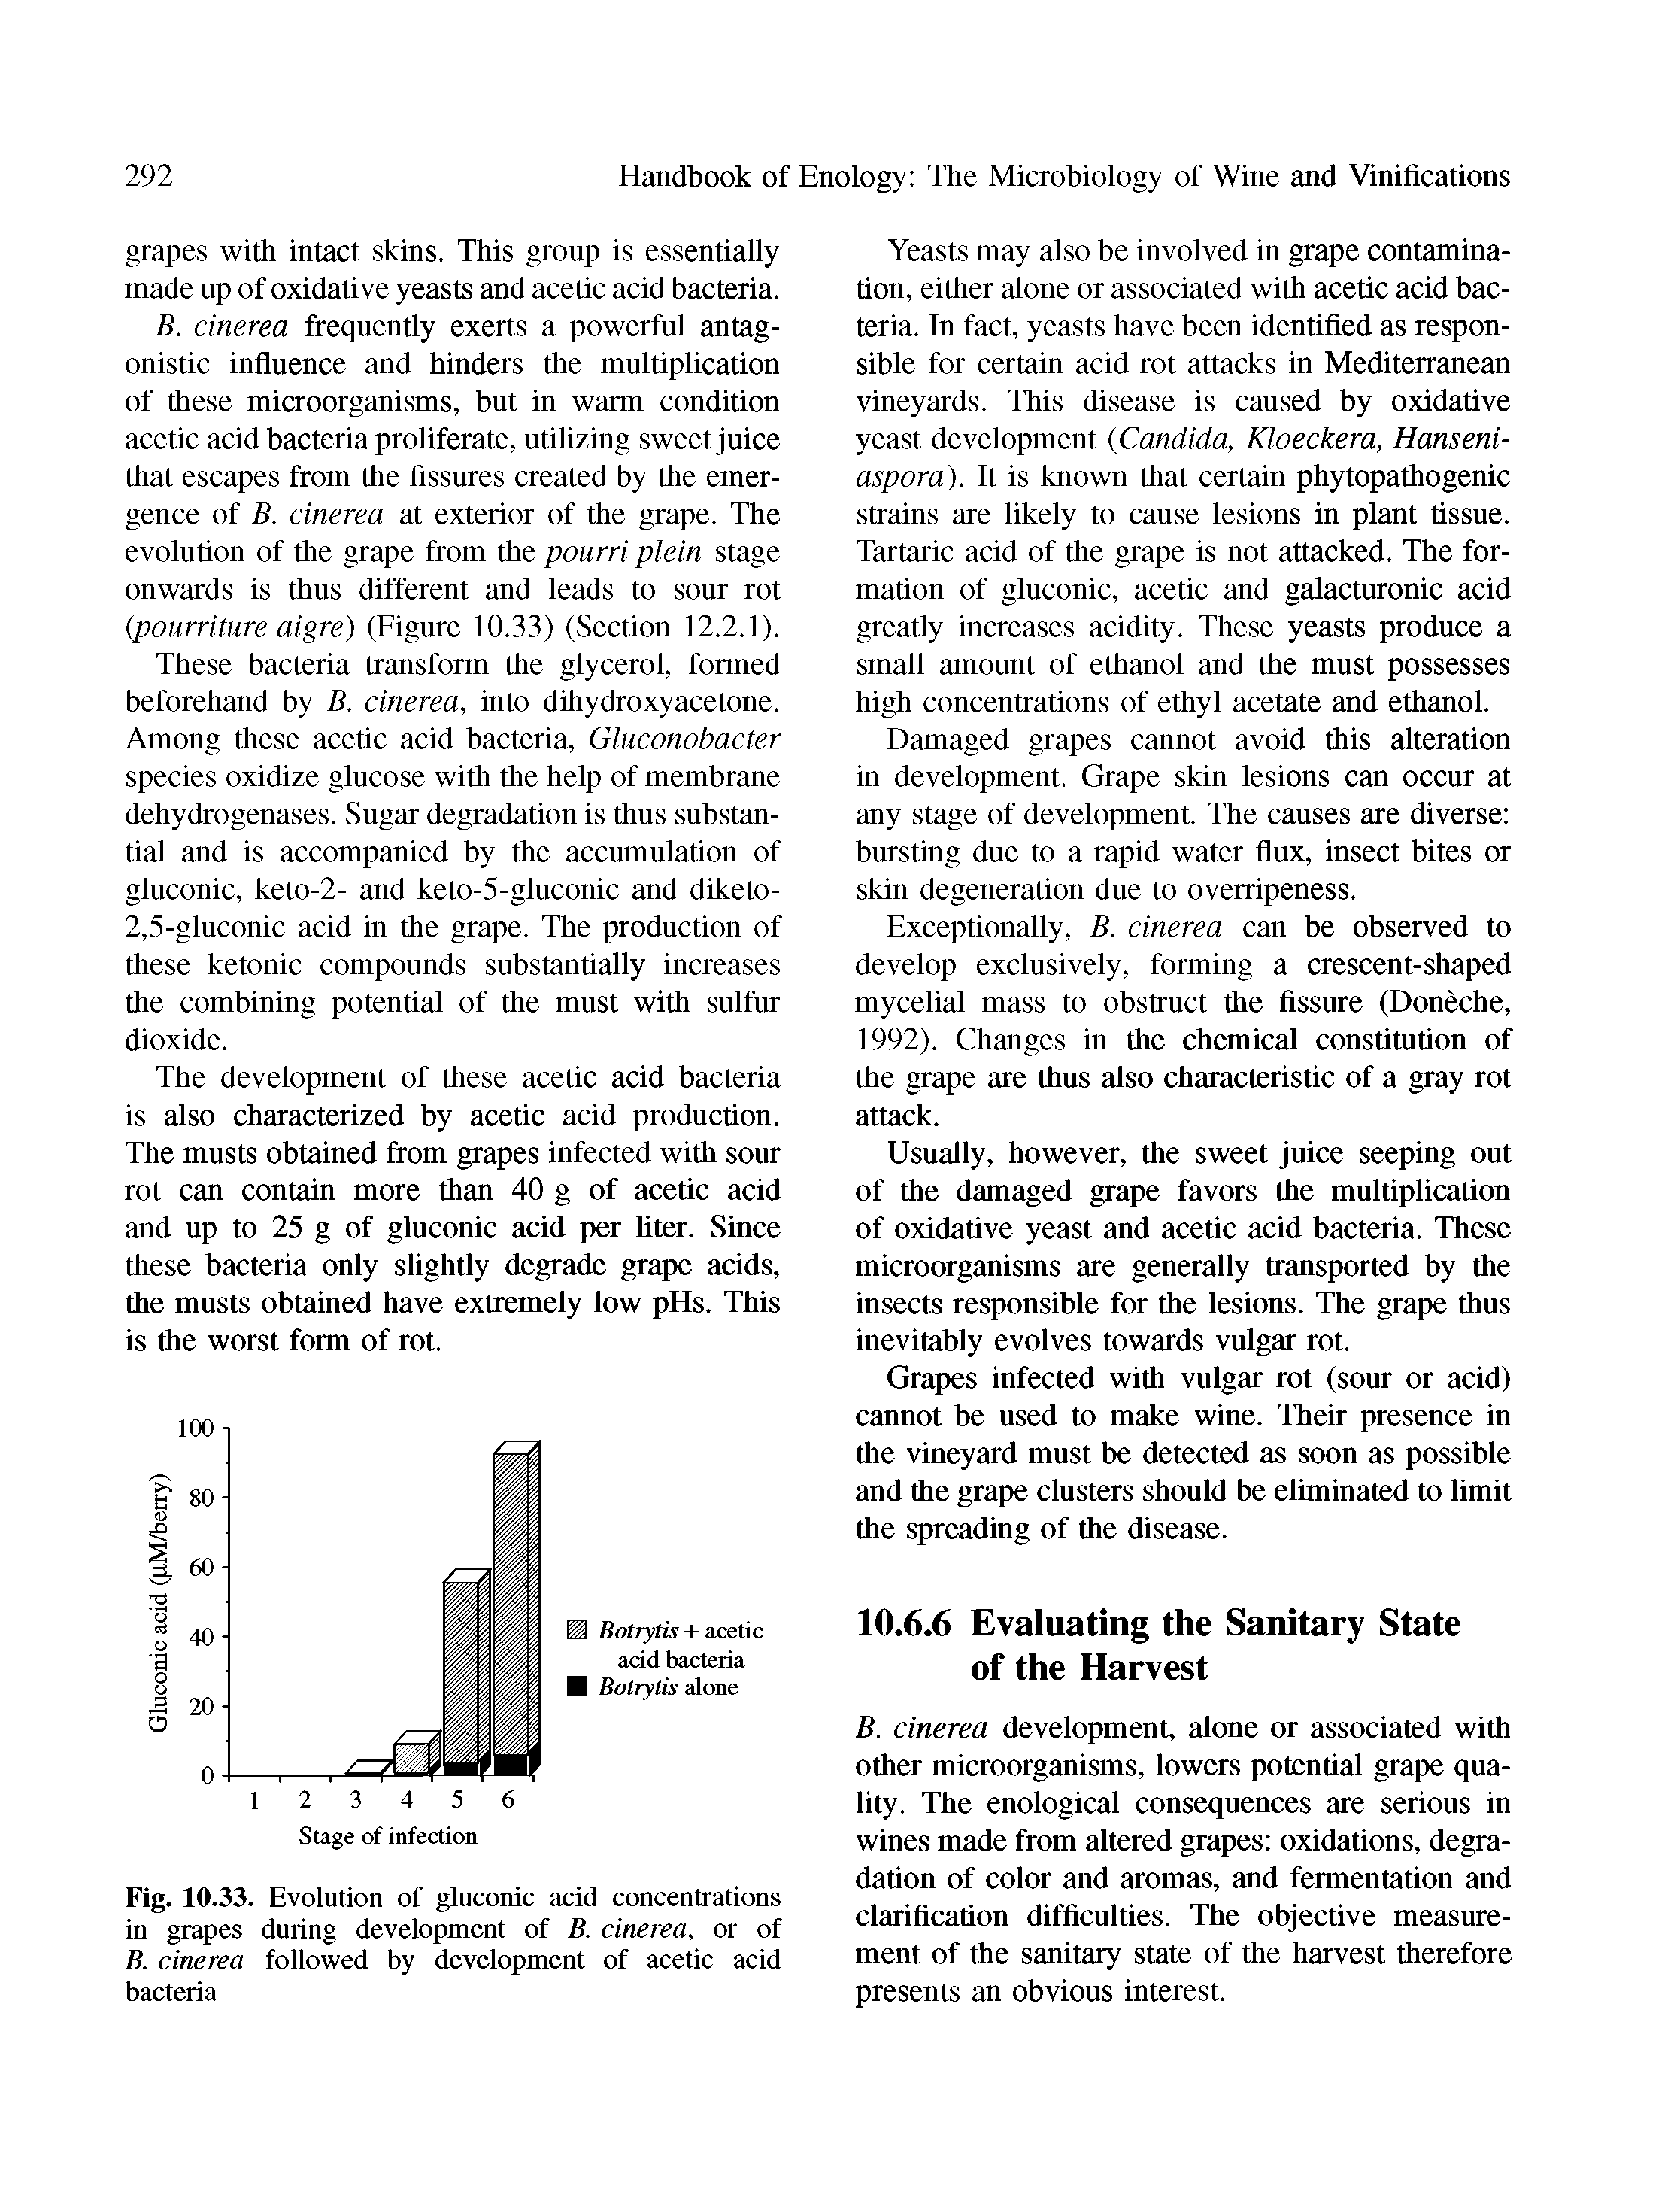 Fig. 10.33. Evolution of gluconic acid concentrations in grapes during development of B. cinerea, or of B. cinerea followed by development of acetic acid bacteria...